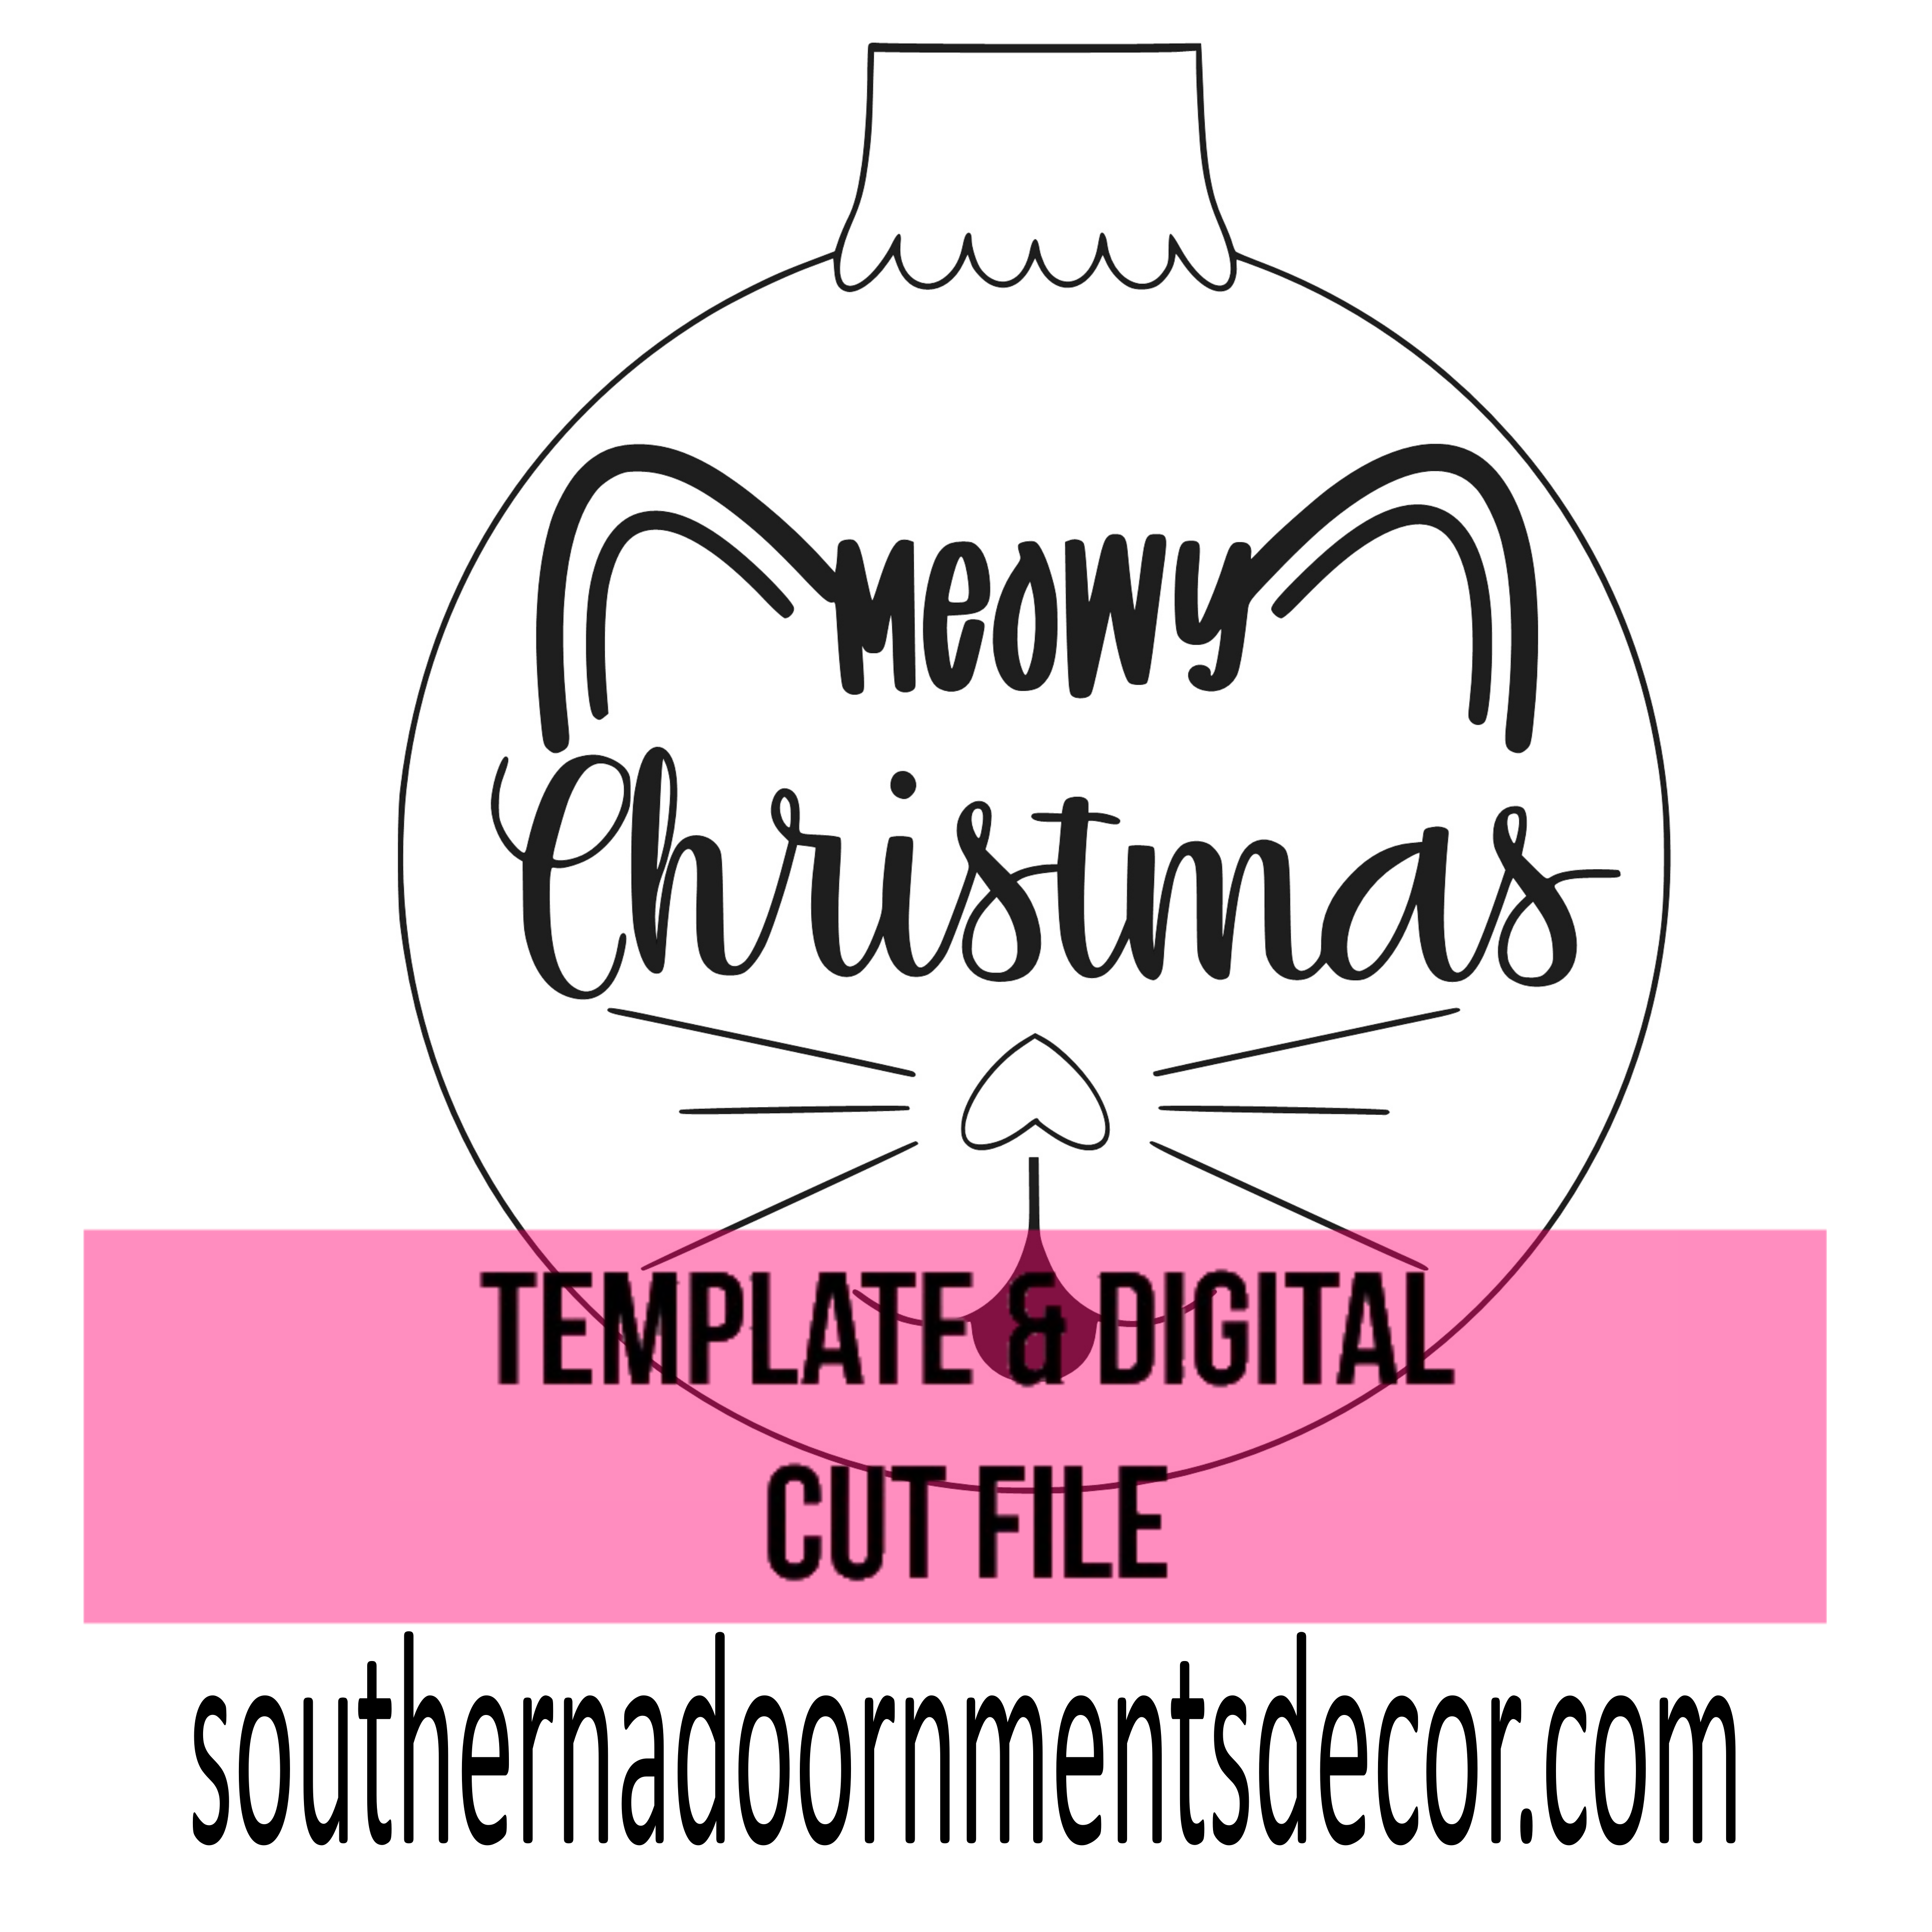 Meowy Christmas Template & Digital Cut File